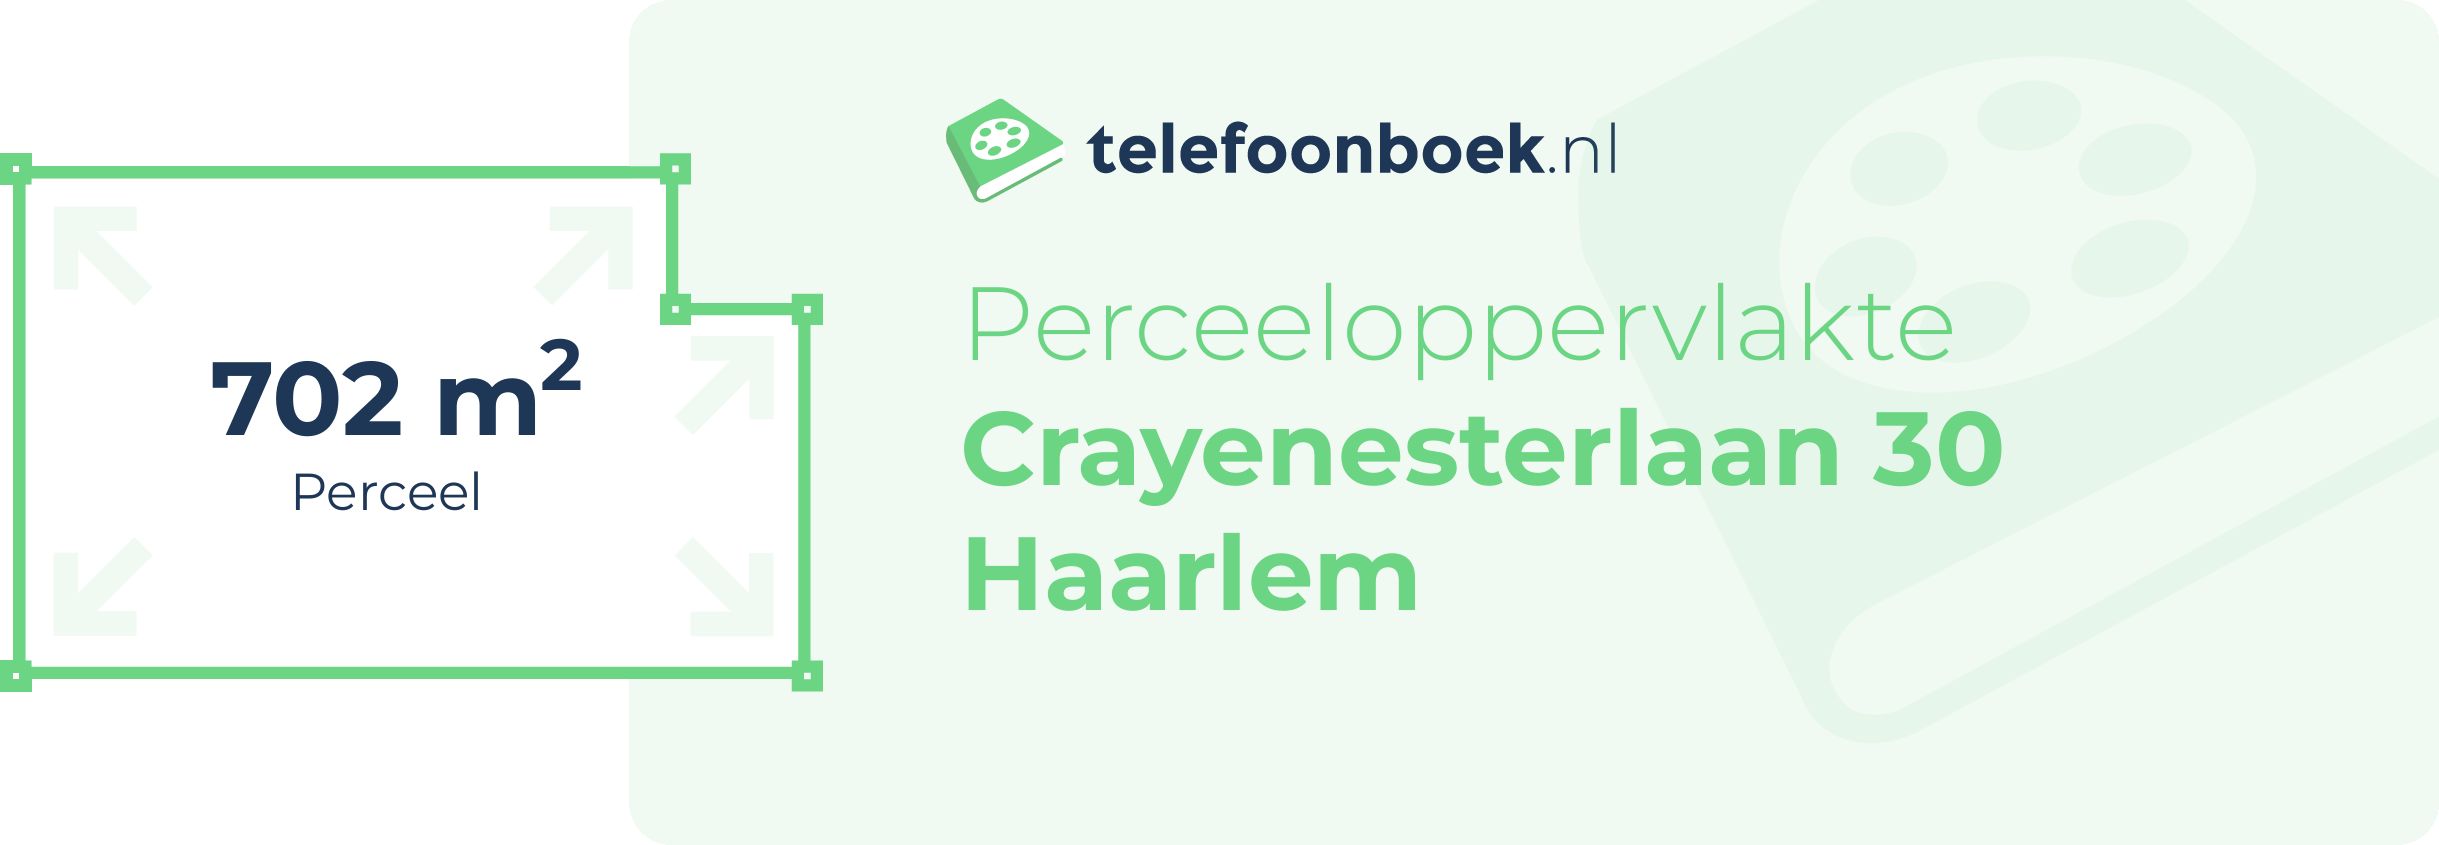 Perceeloppervlakte Crayenesterlaan 30 Haarlem